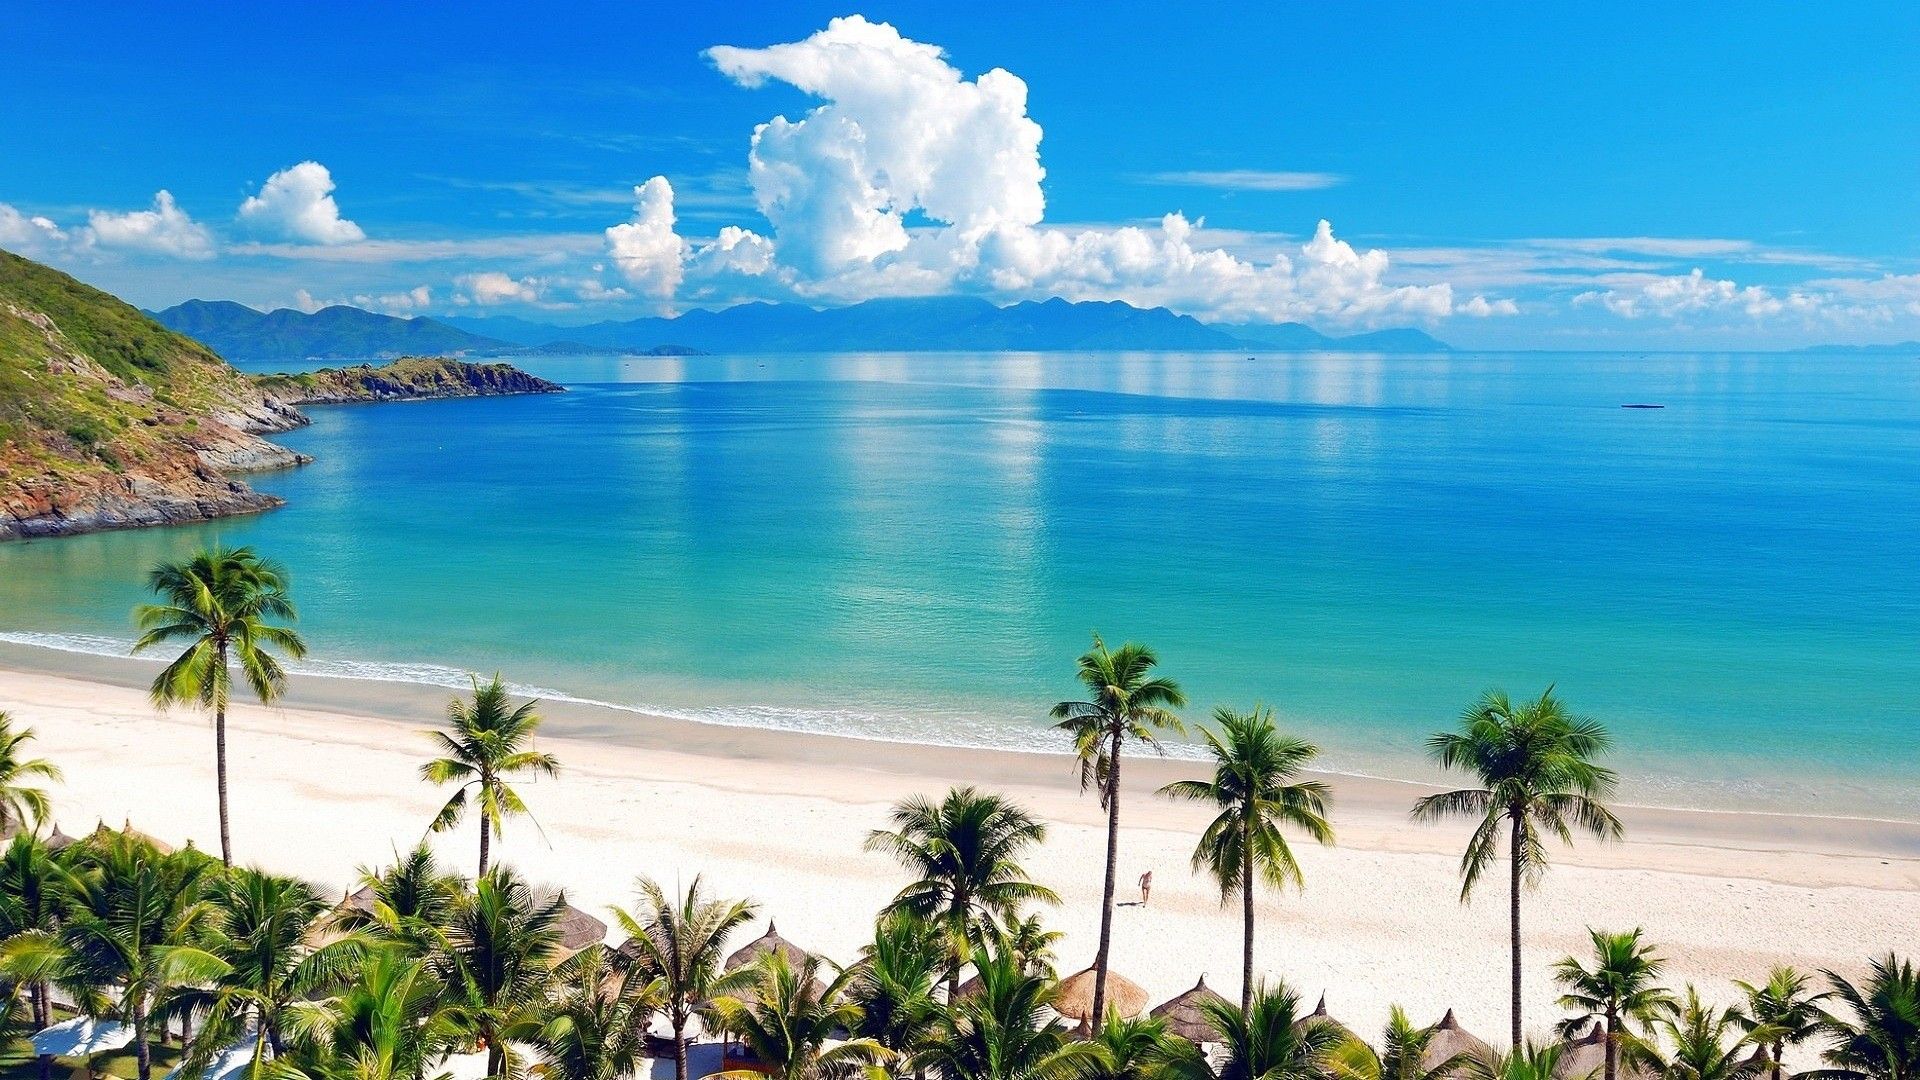 Beach And Blue Sea Wallpaper Download Full HD Wallpaper HD Free